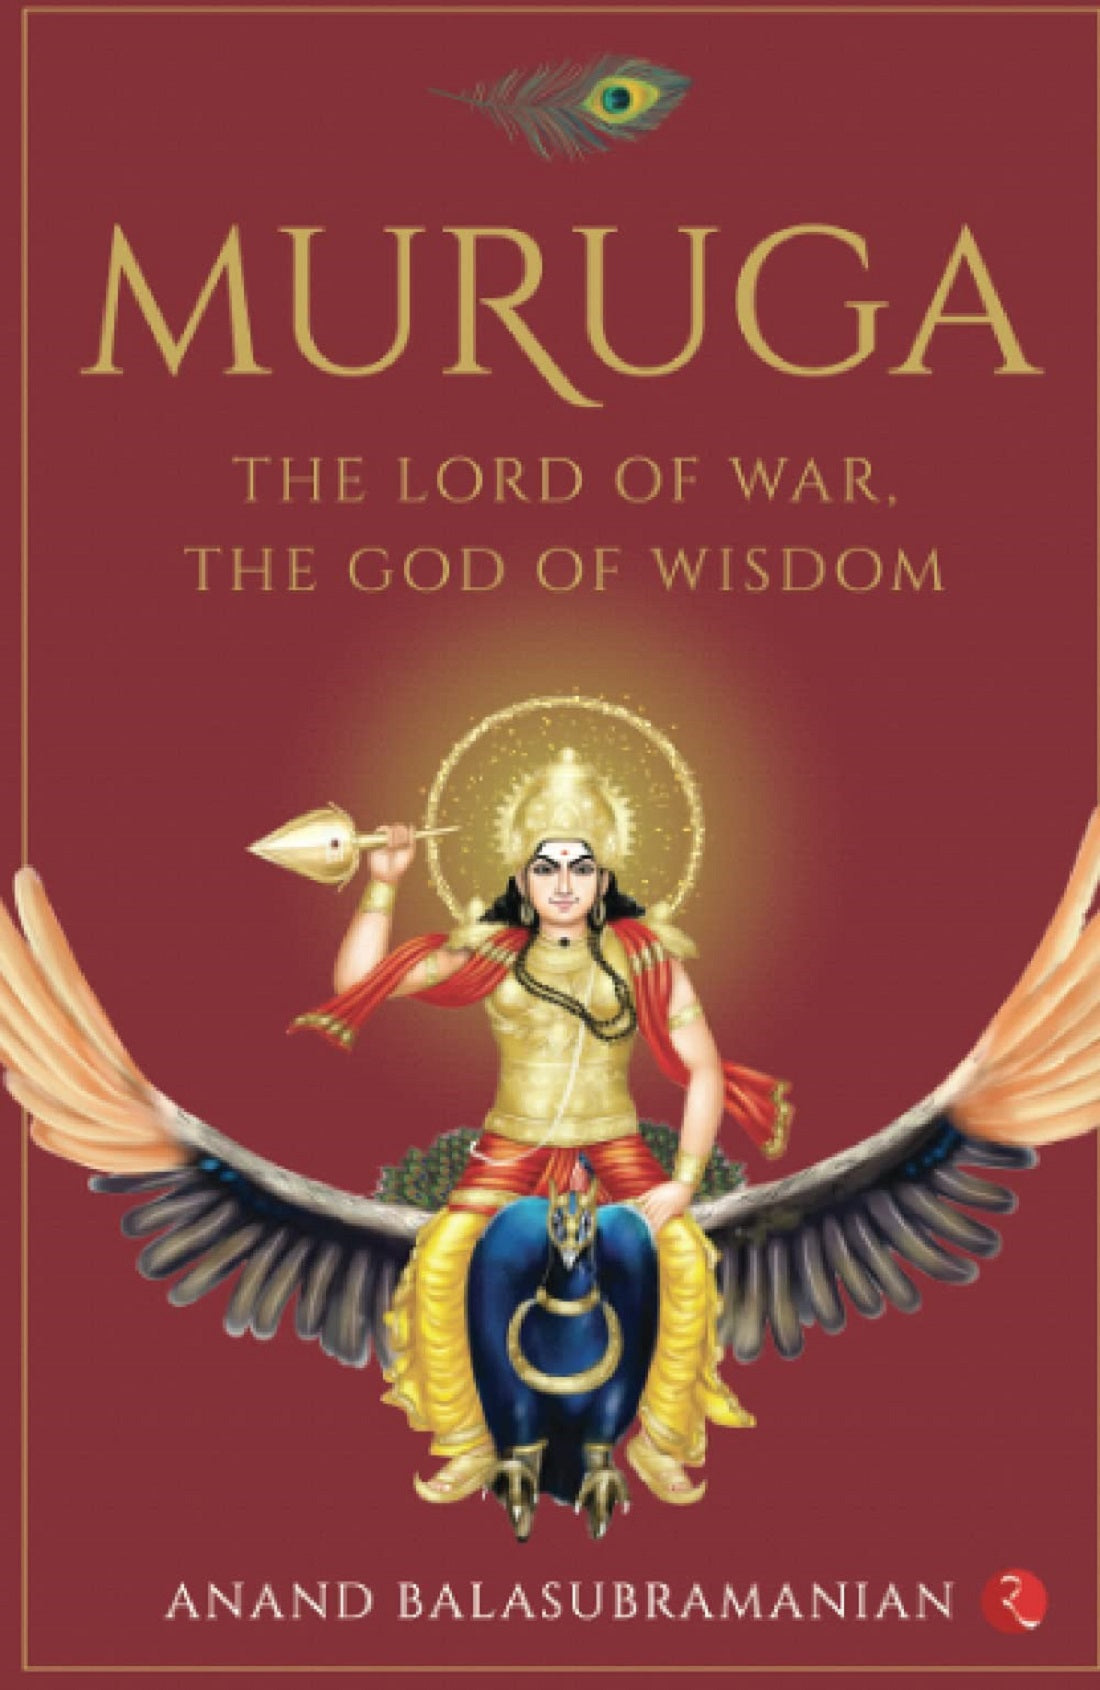 MURUGA THE LORD OF WAR THE GOD OF WISDOM